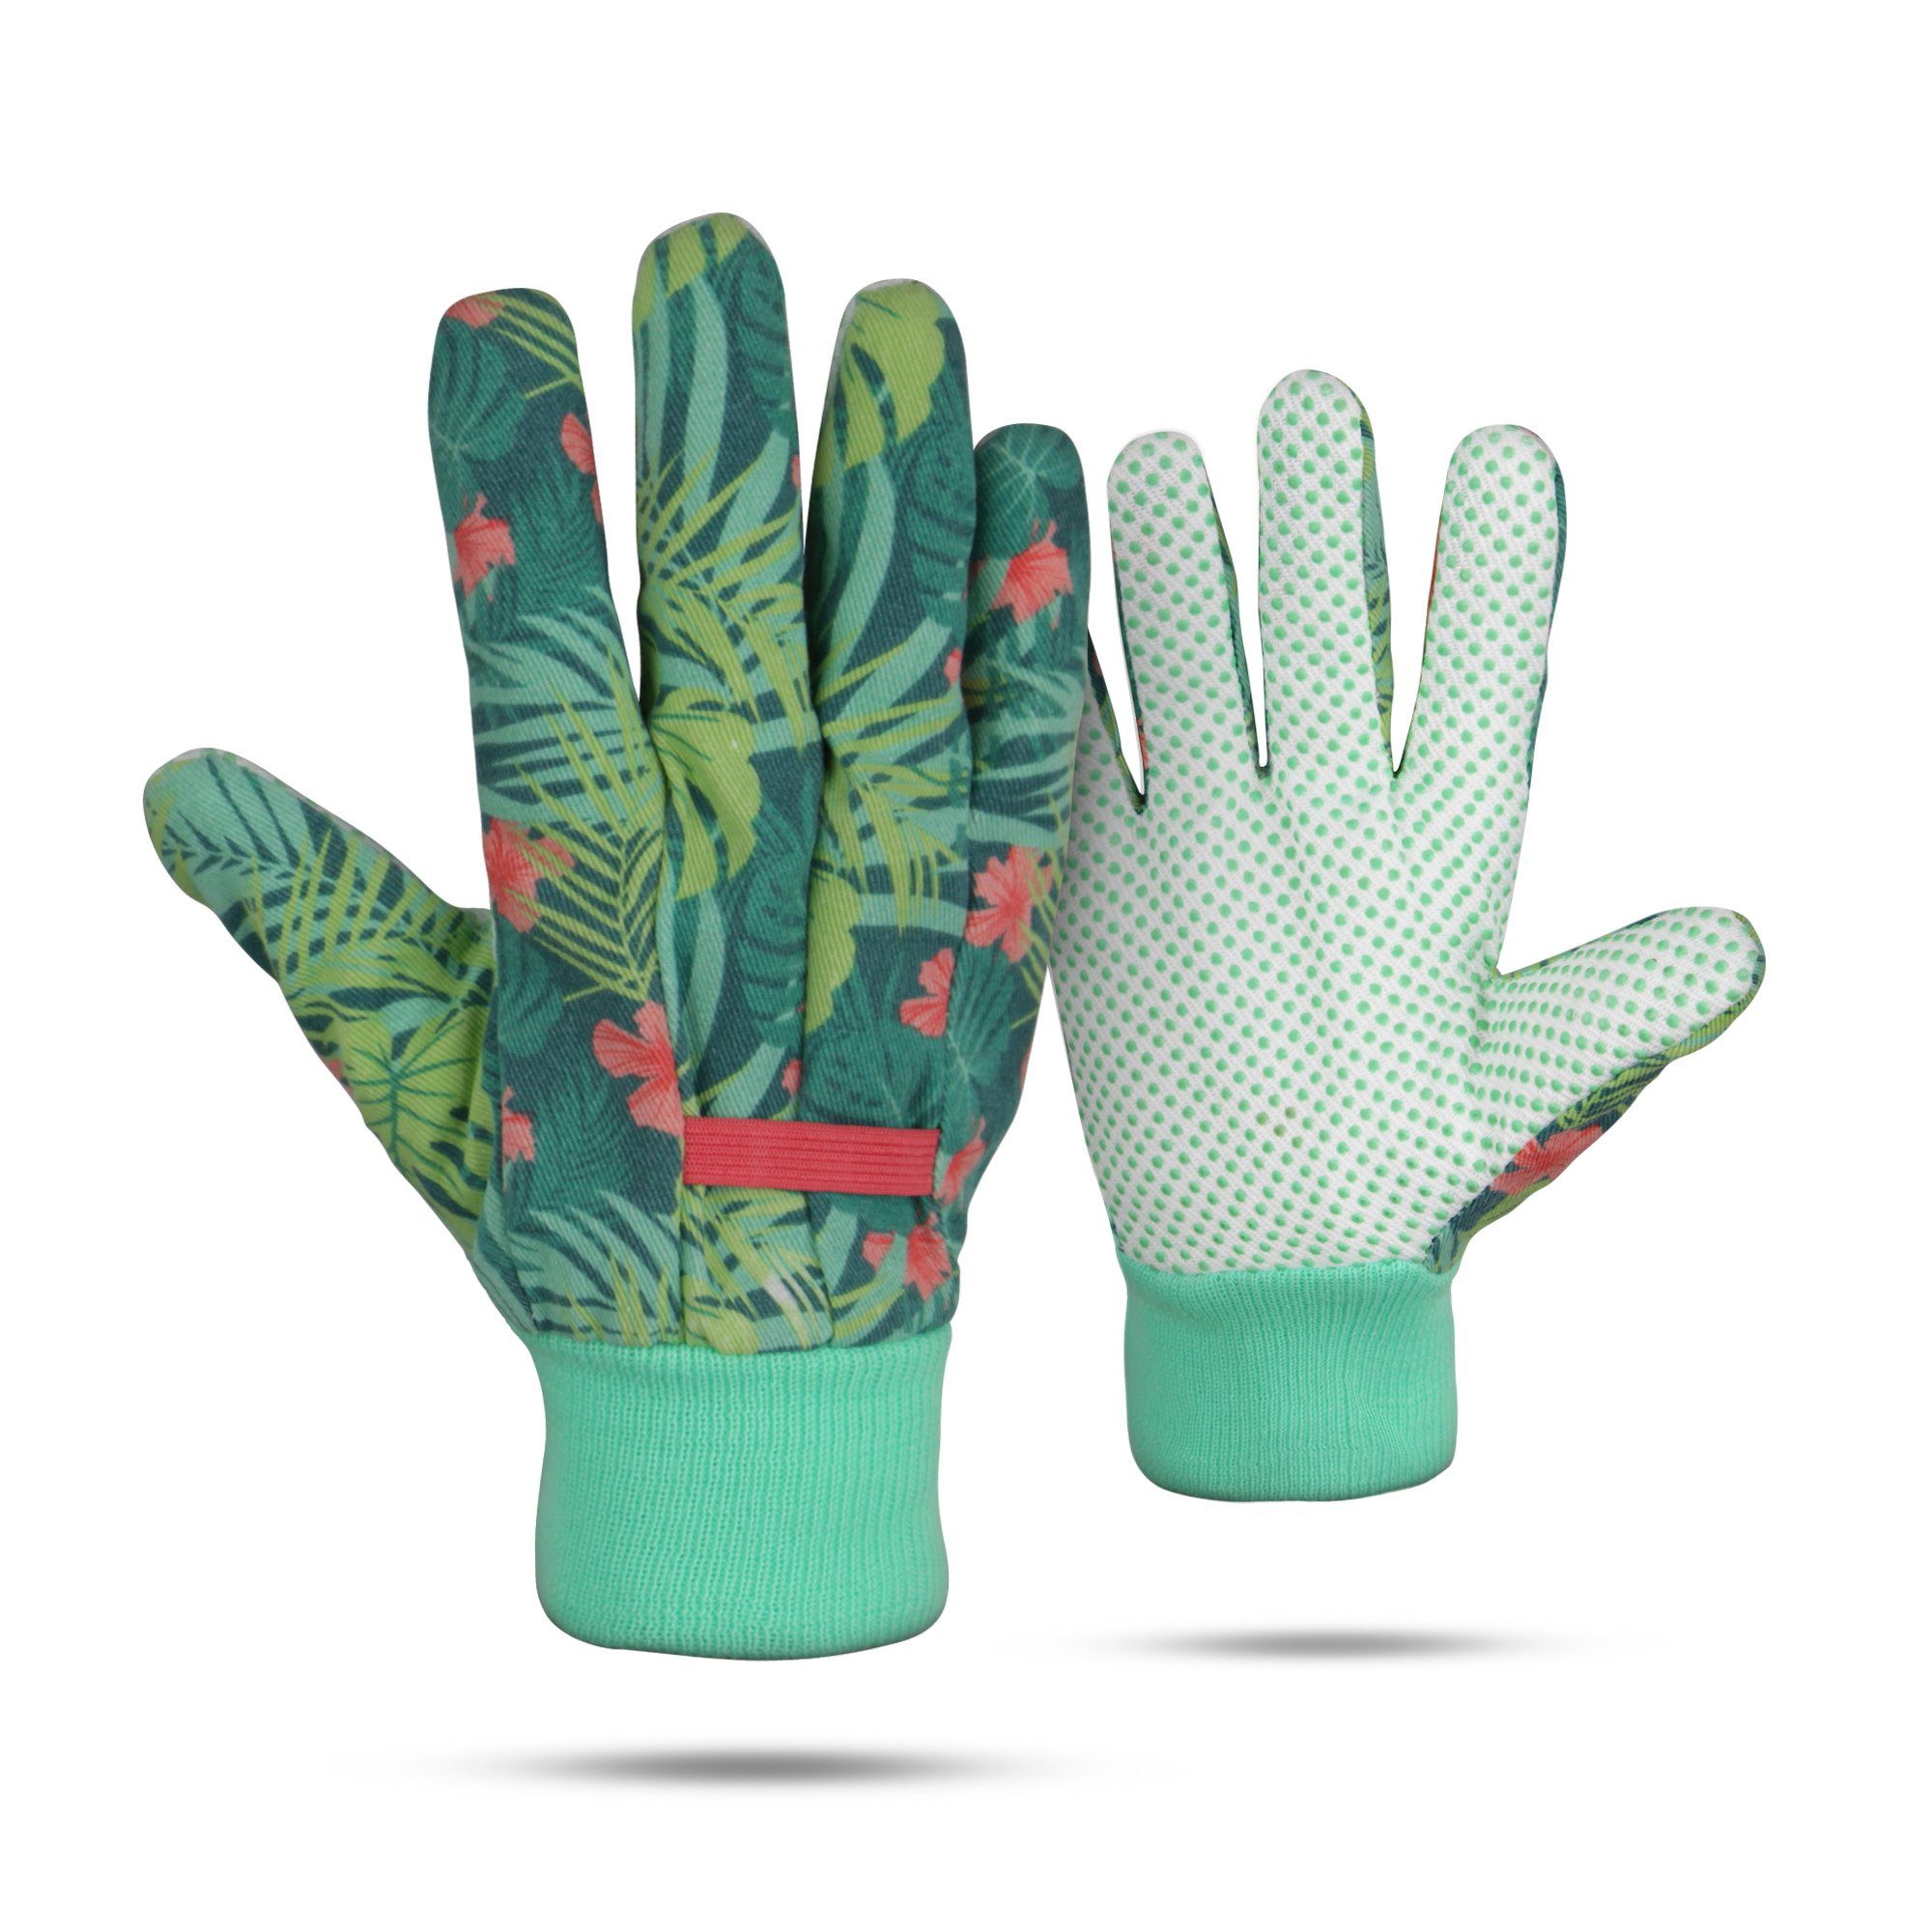 SPONTEX Gartenhandschuhe Schutzhandschuh Flower (1 Paar) Schutzhandschuh für Damen/Herren - Antirutsch Beschichtung